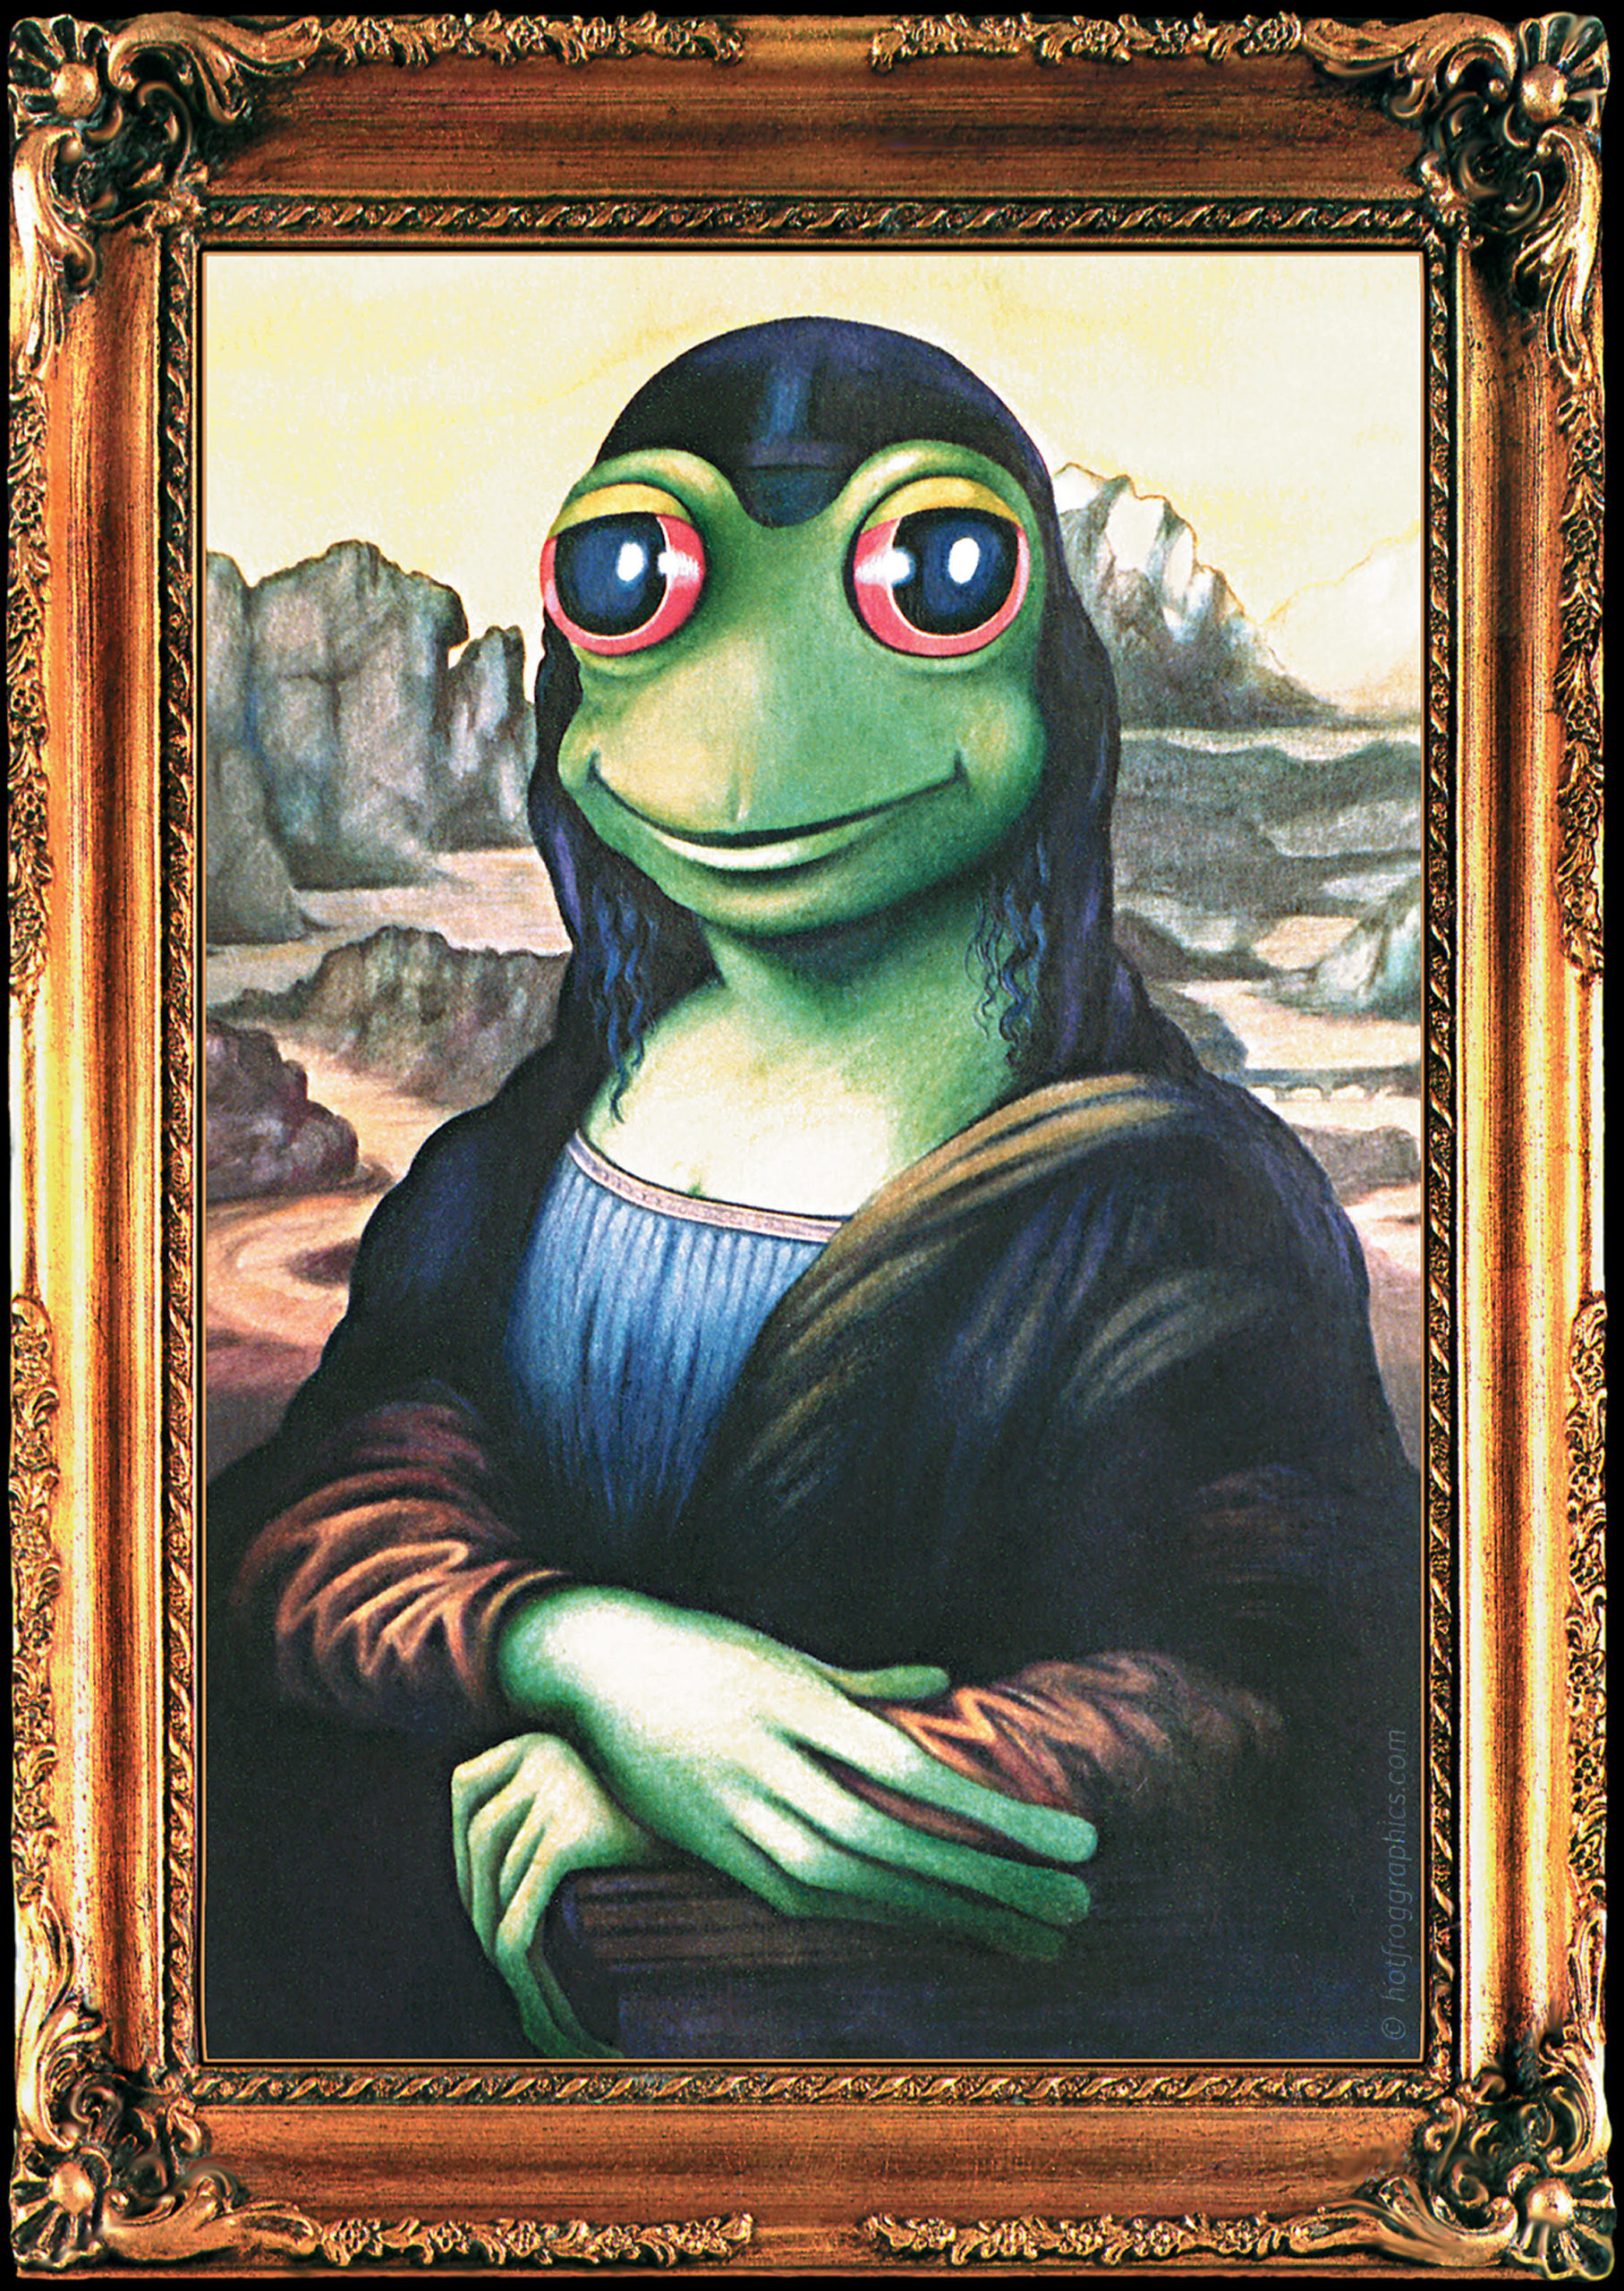 Mona Lisa Frog from © Paul Morton www.hotfroggraphics.com